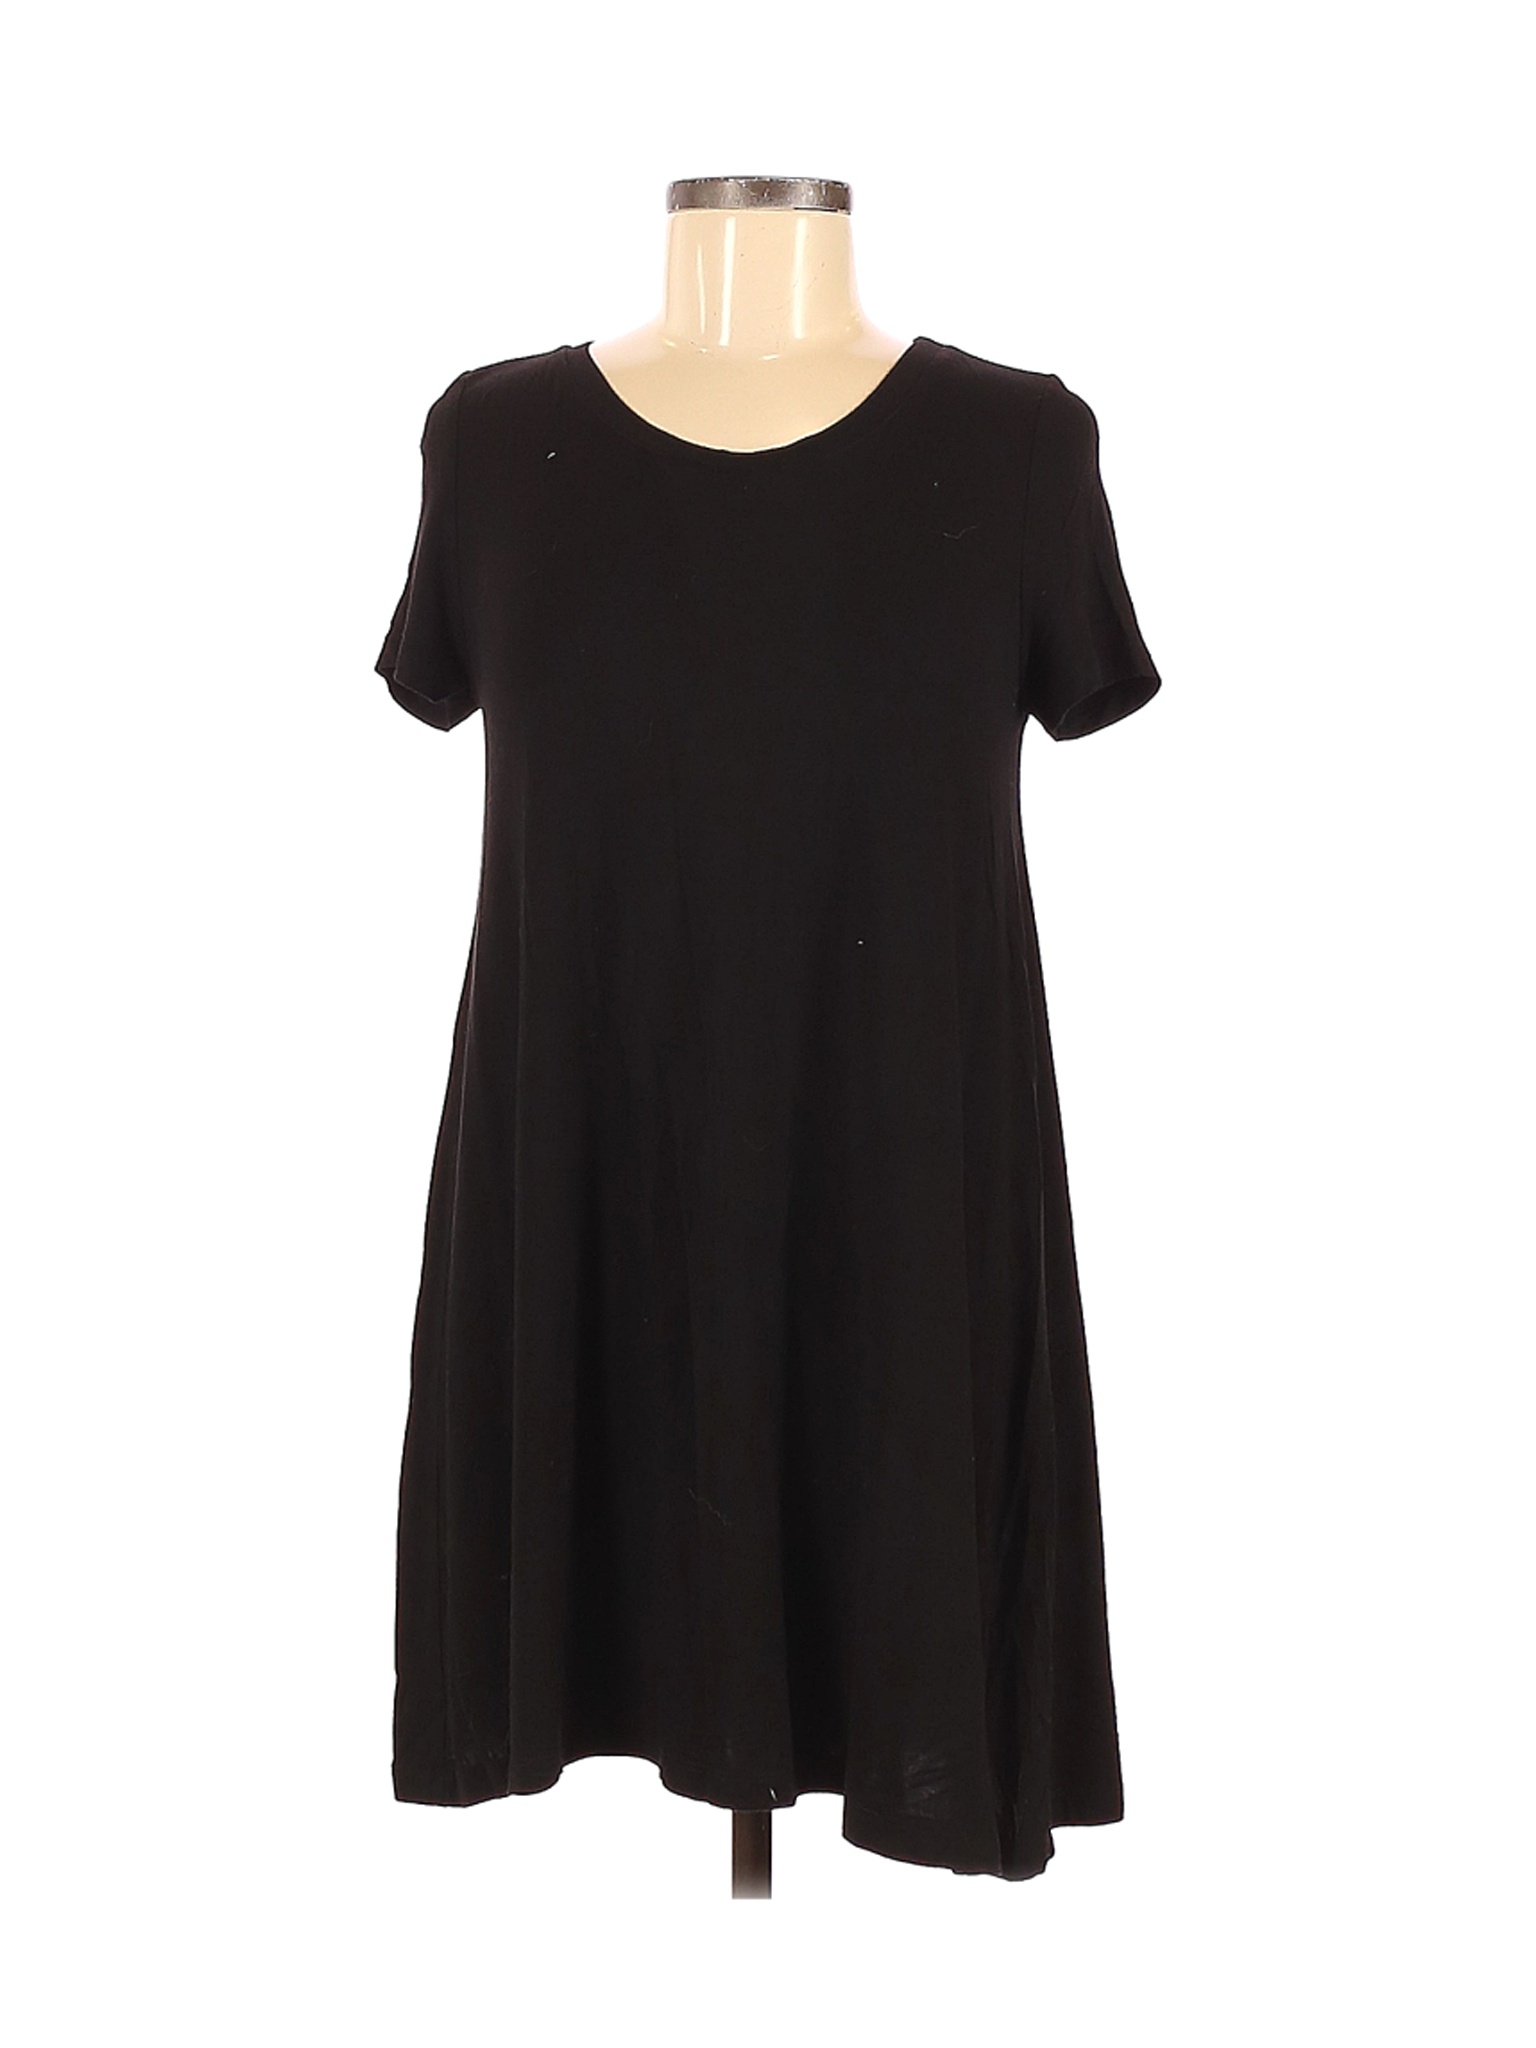 Bamboo Women Black Short Sleeve T-Shirt M | eBay